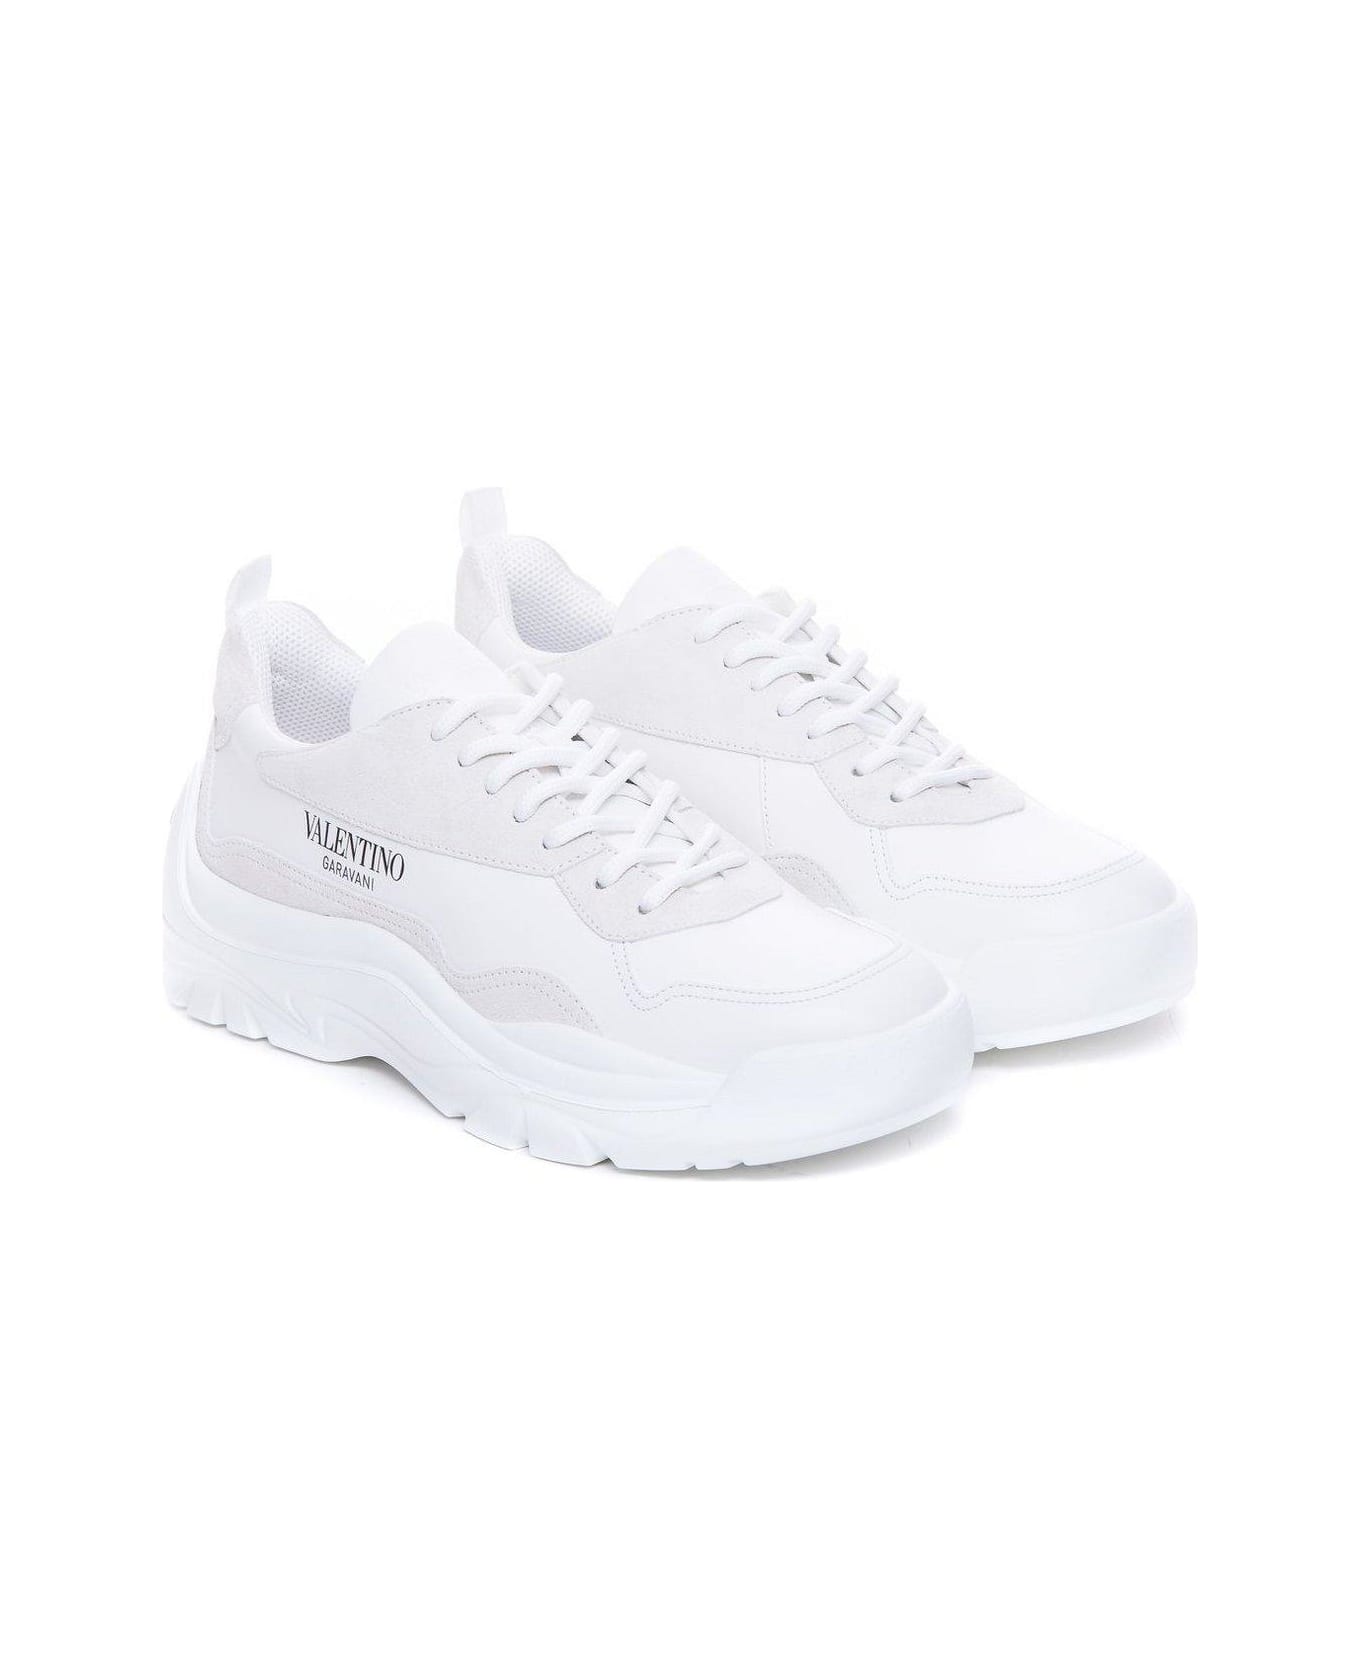 Valentino Garavani Gumboy Lace-up Sneakers - Bianco/bianco/bianco